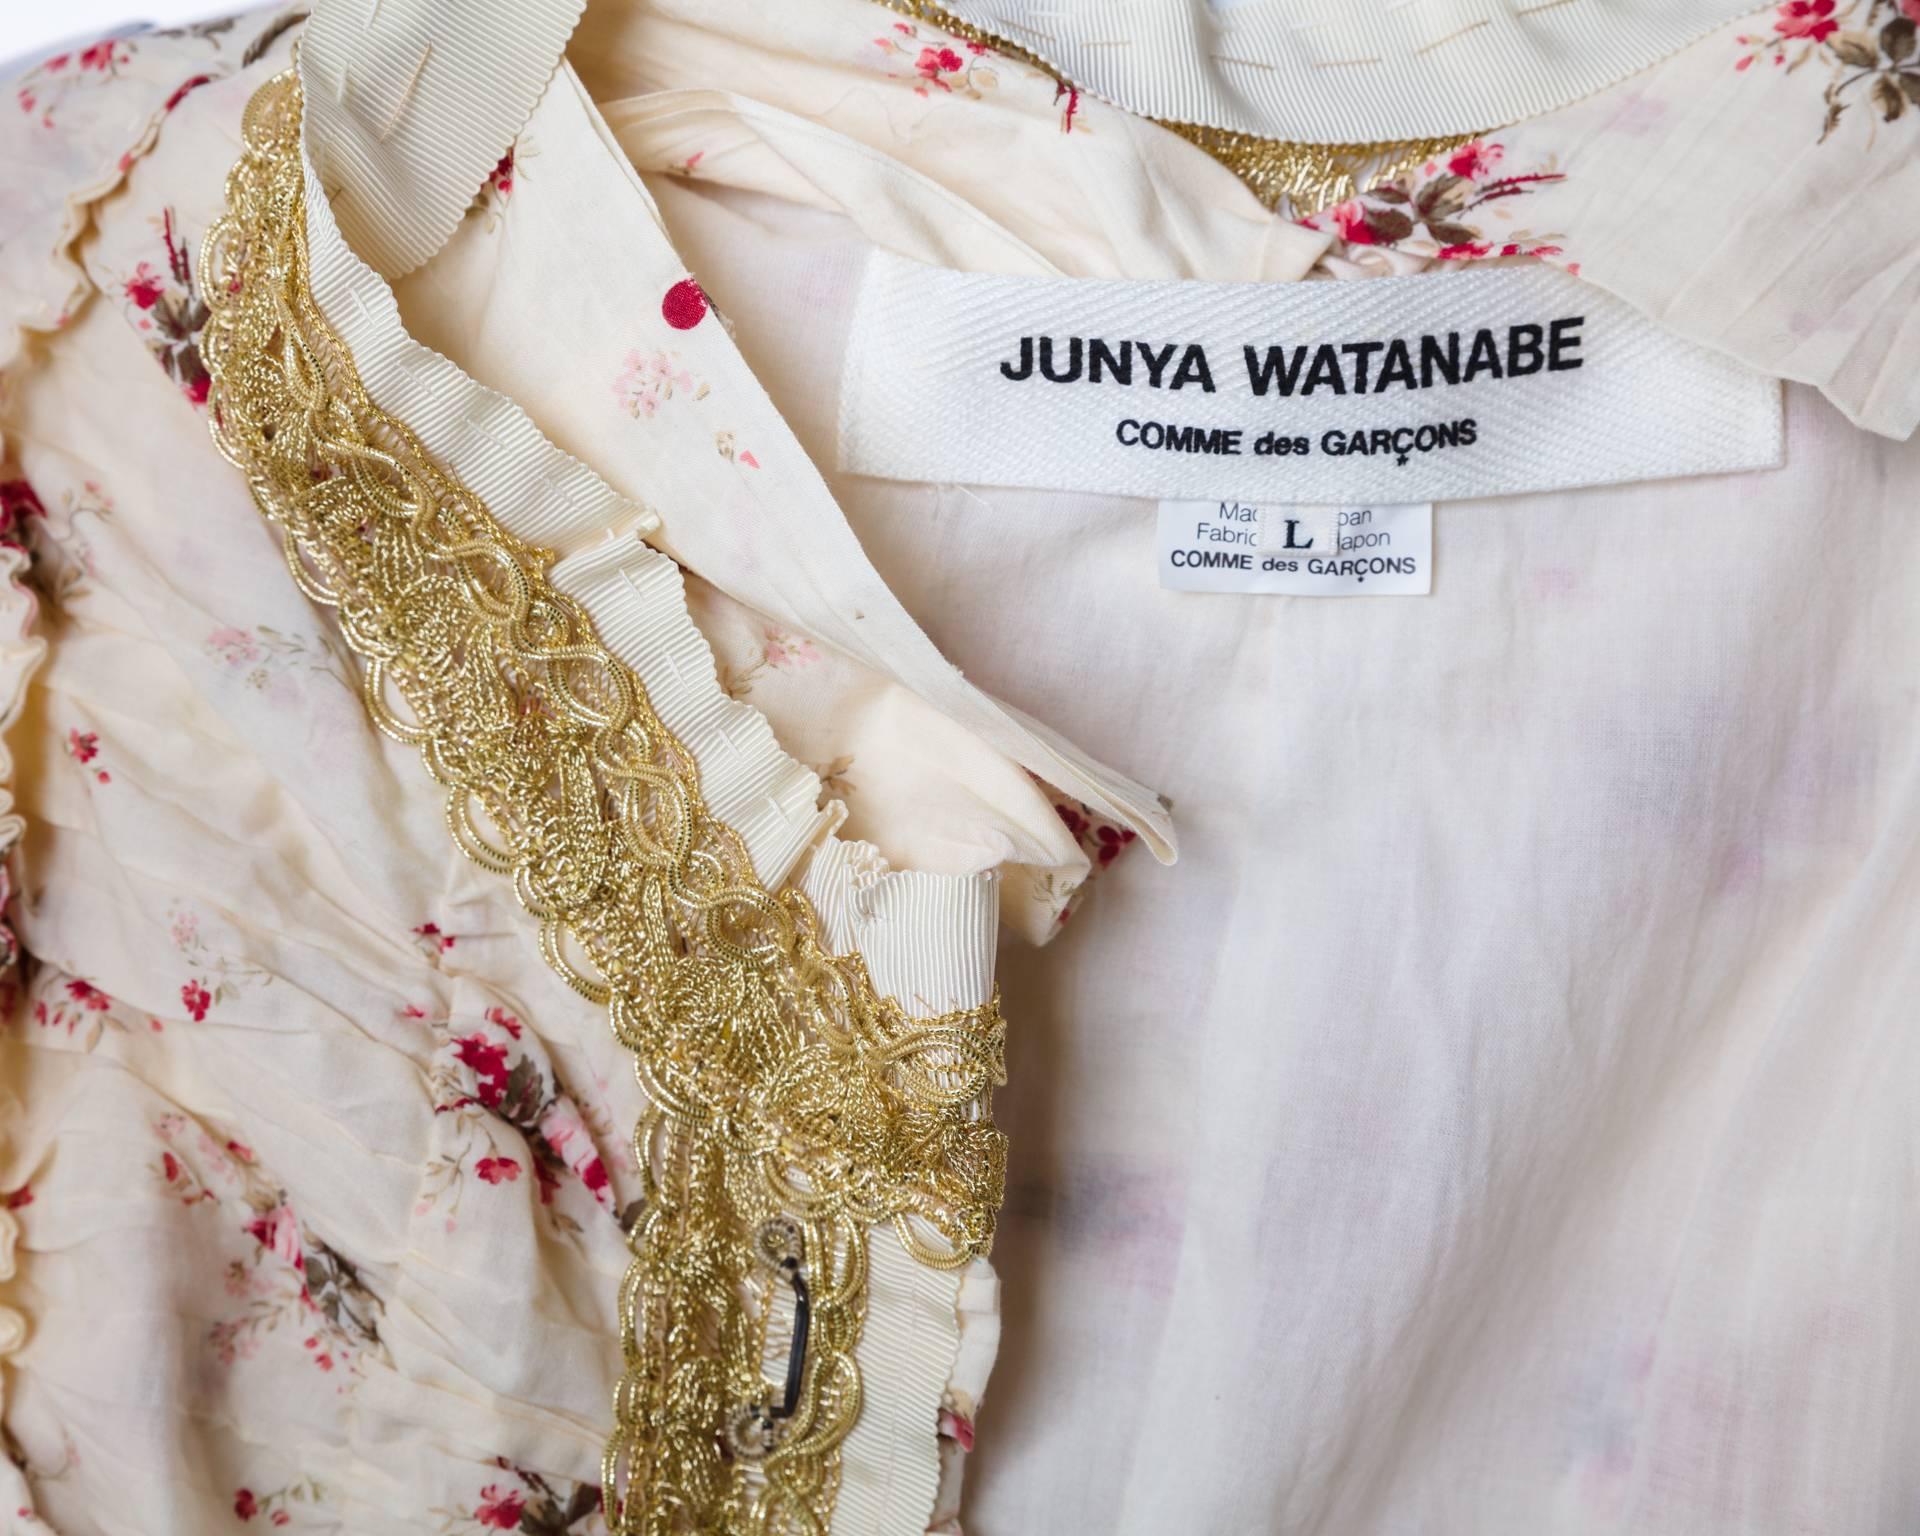 2008 Junya Watanabe Comme des Garcons Liberty Floral Gold Lace Runway Jacket 3